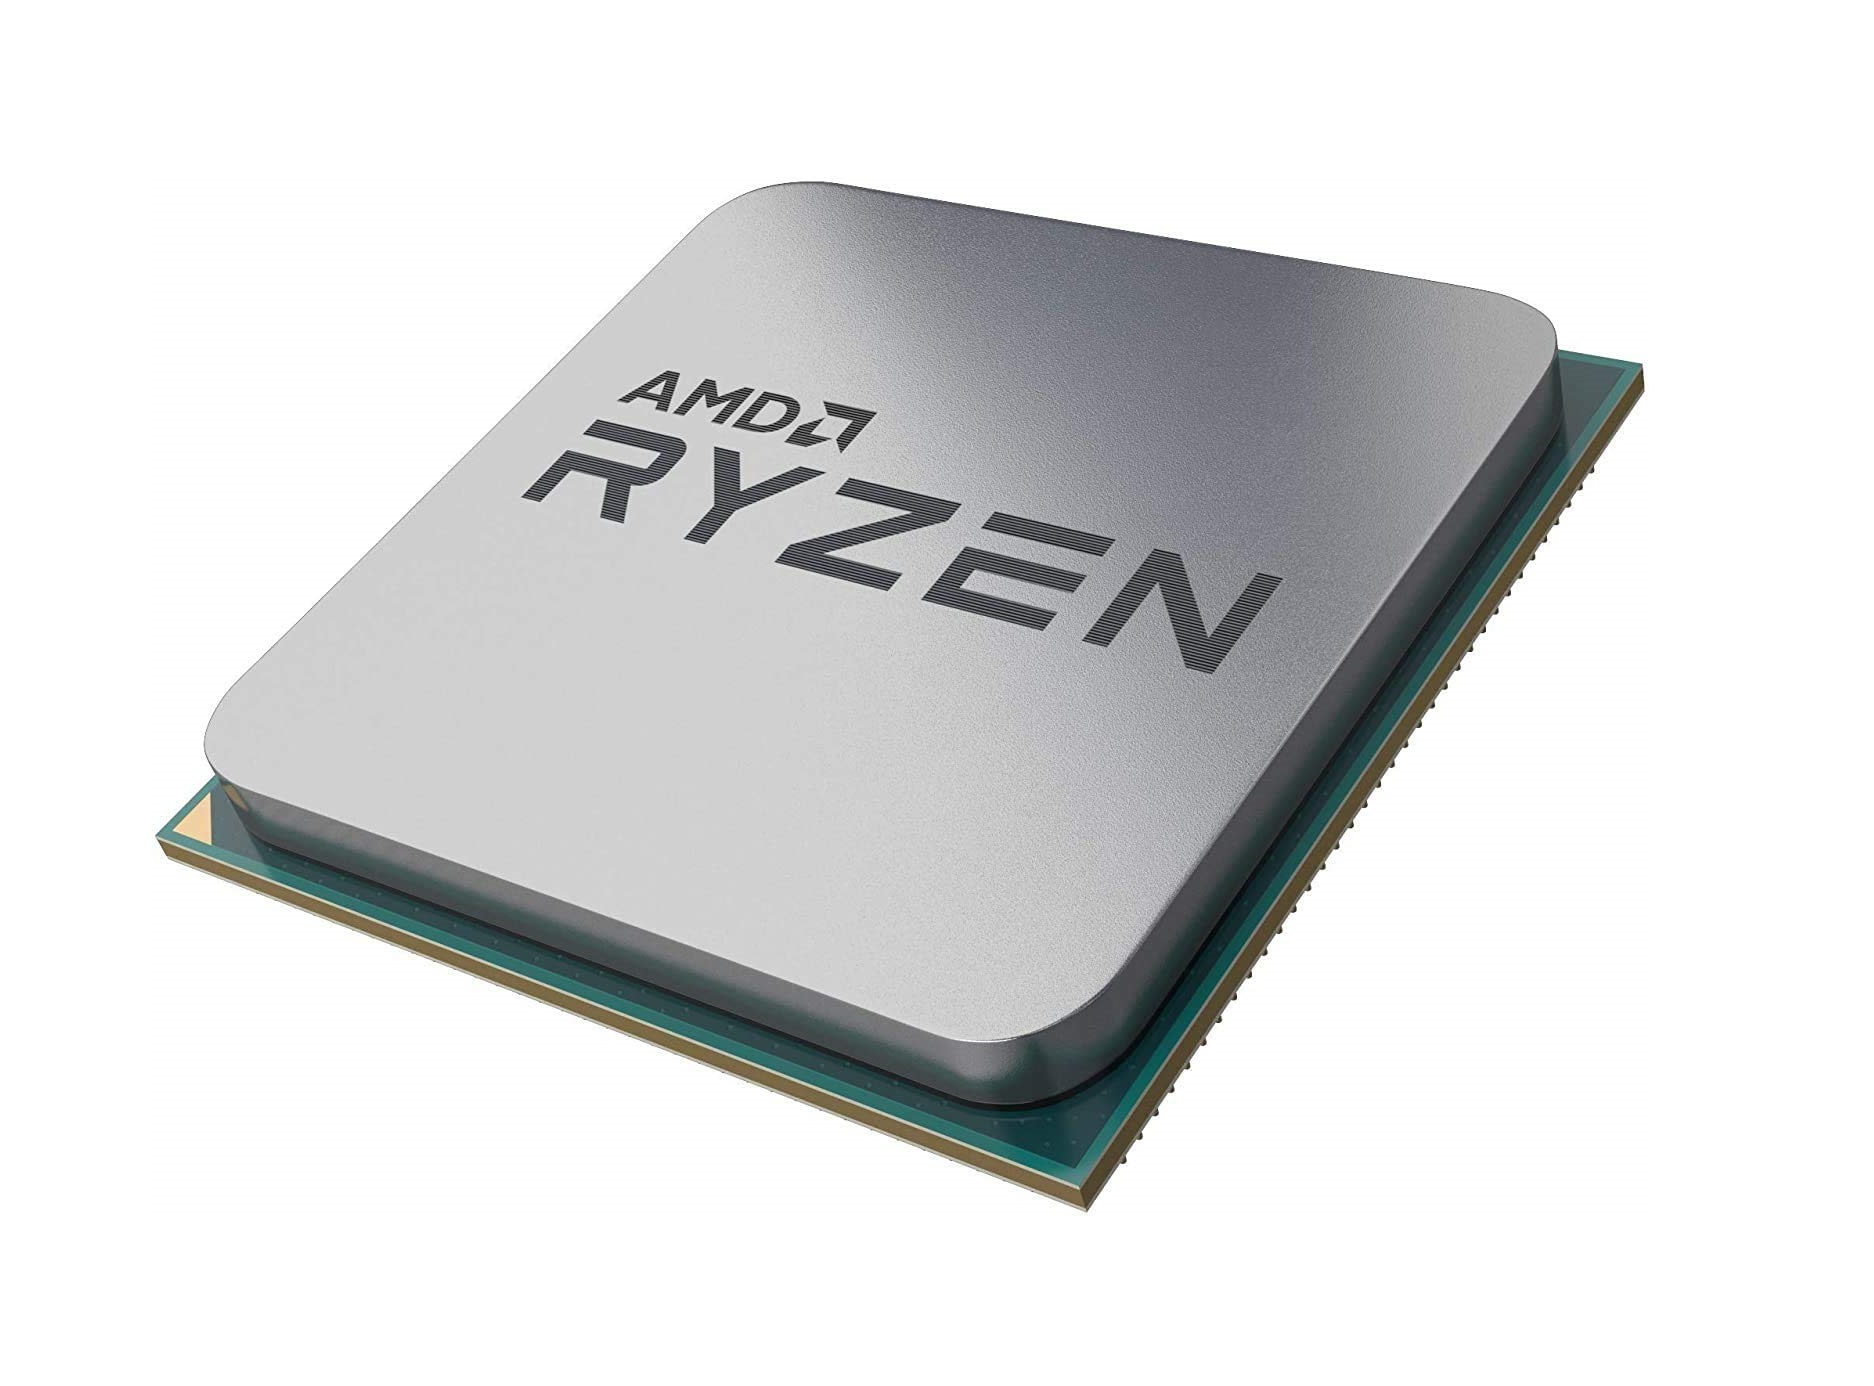 AMD Ryzen 9 5900X, 3,8/4,7GHz, 12/24 C/T, AM4, No Cooler, 105 Watt, no Graphics